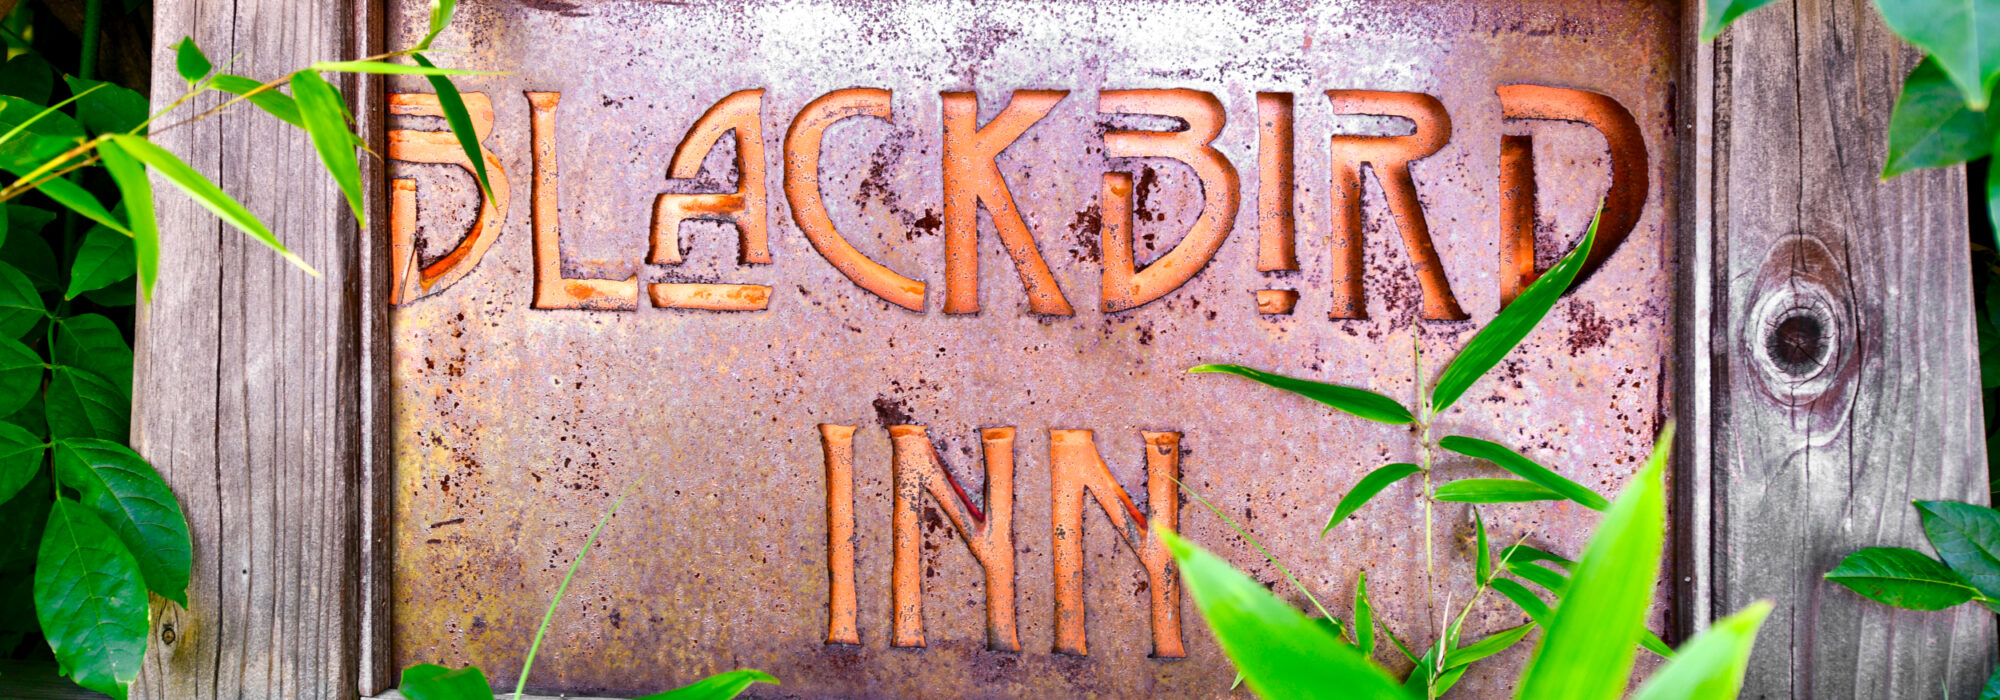 Rusty metal sign says Blackbird Inn, frame is wood.